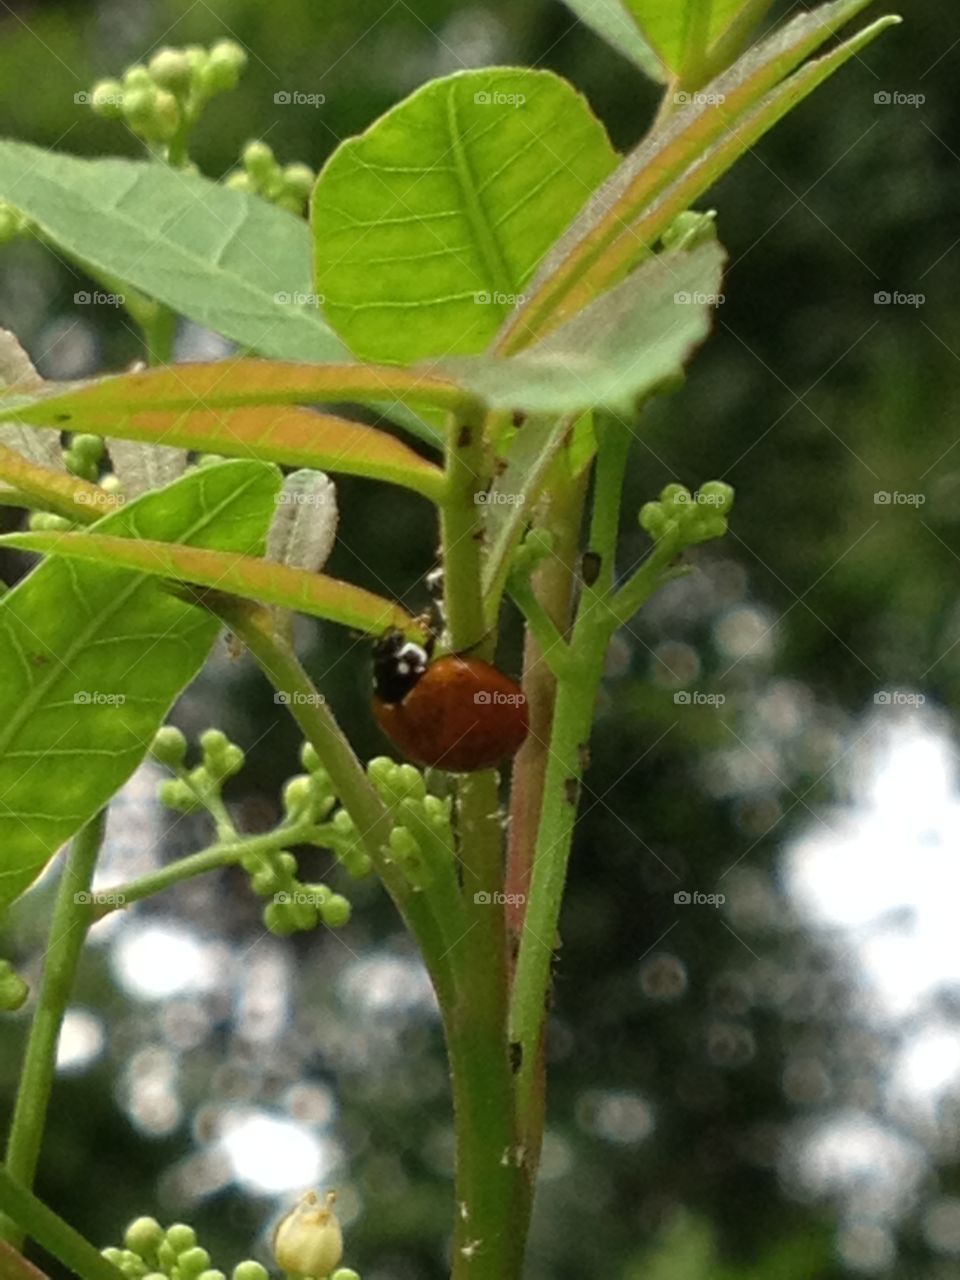 No spots on this ladybug